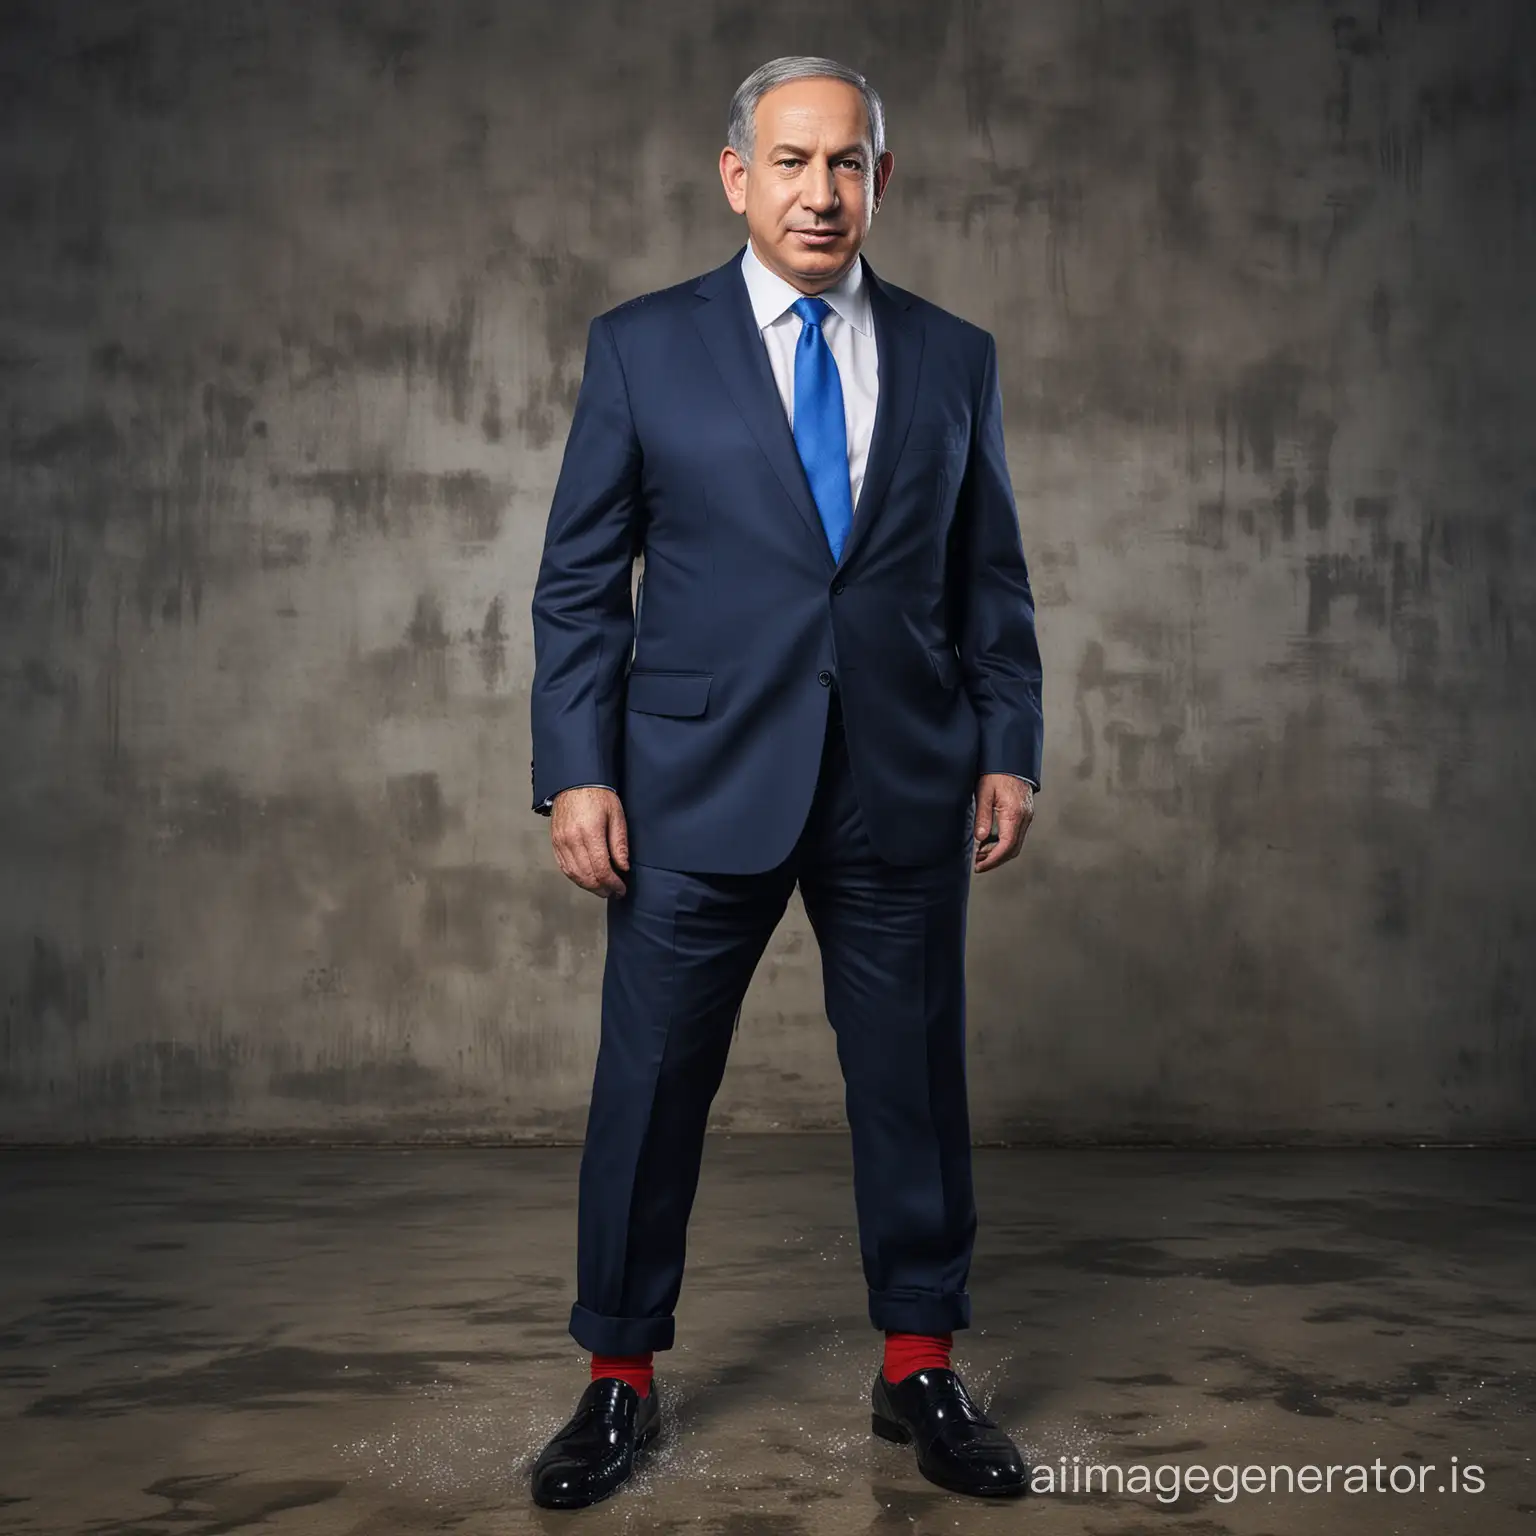 Benjamin-Netanyahu-in-Dramatic-Office-Setting-with-Wet-Pants